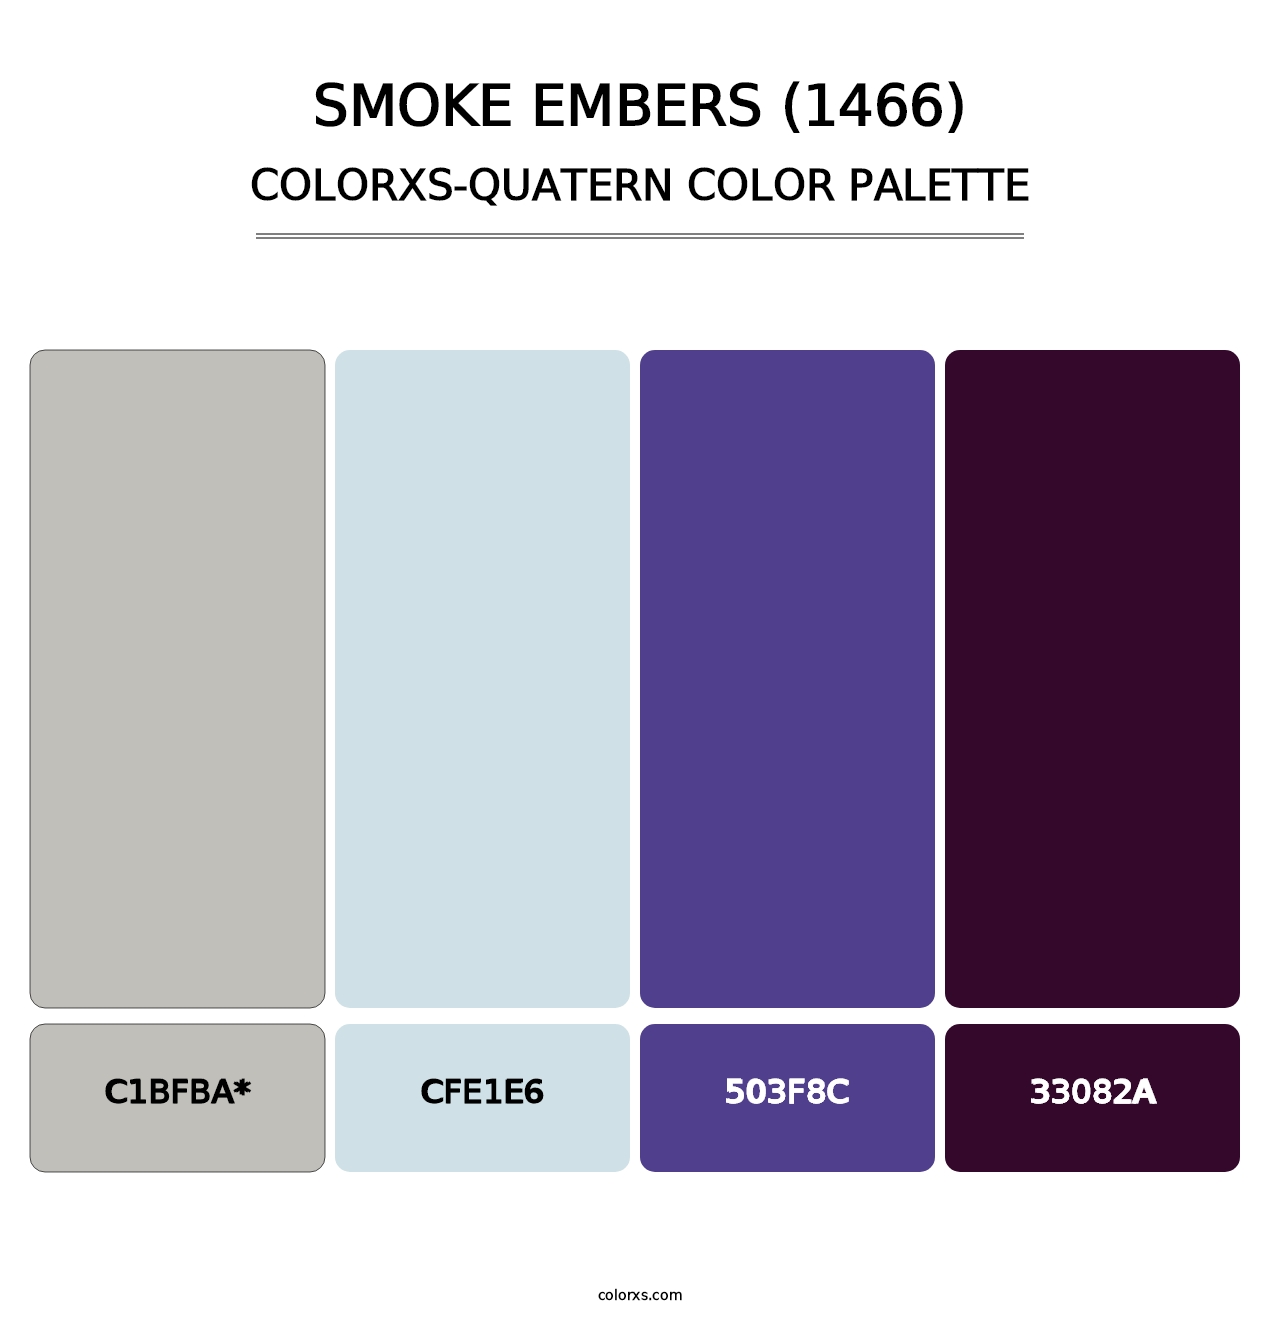 Smoke Embers (1466) - Colorxs Quad Palette